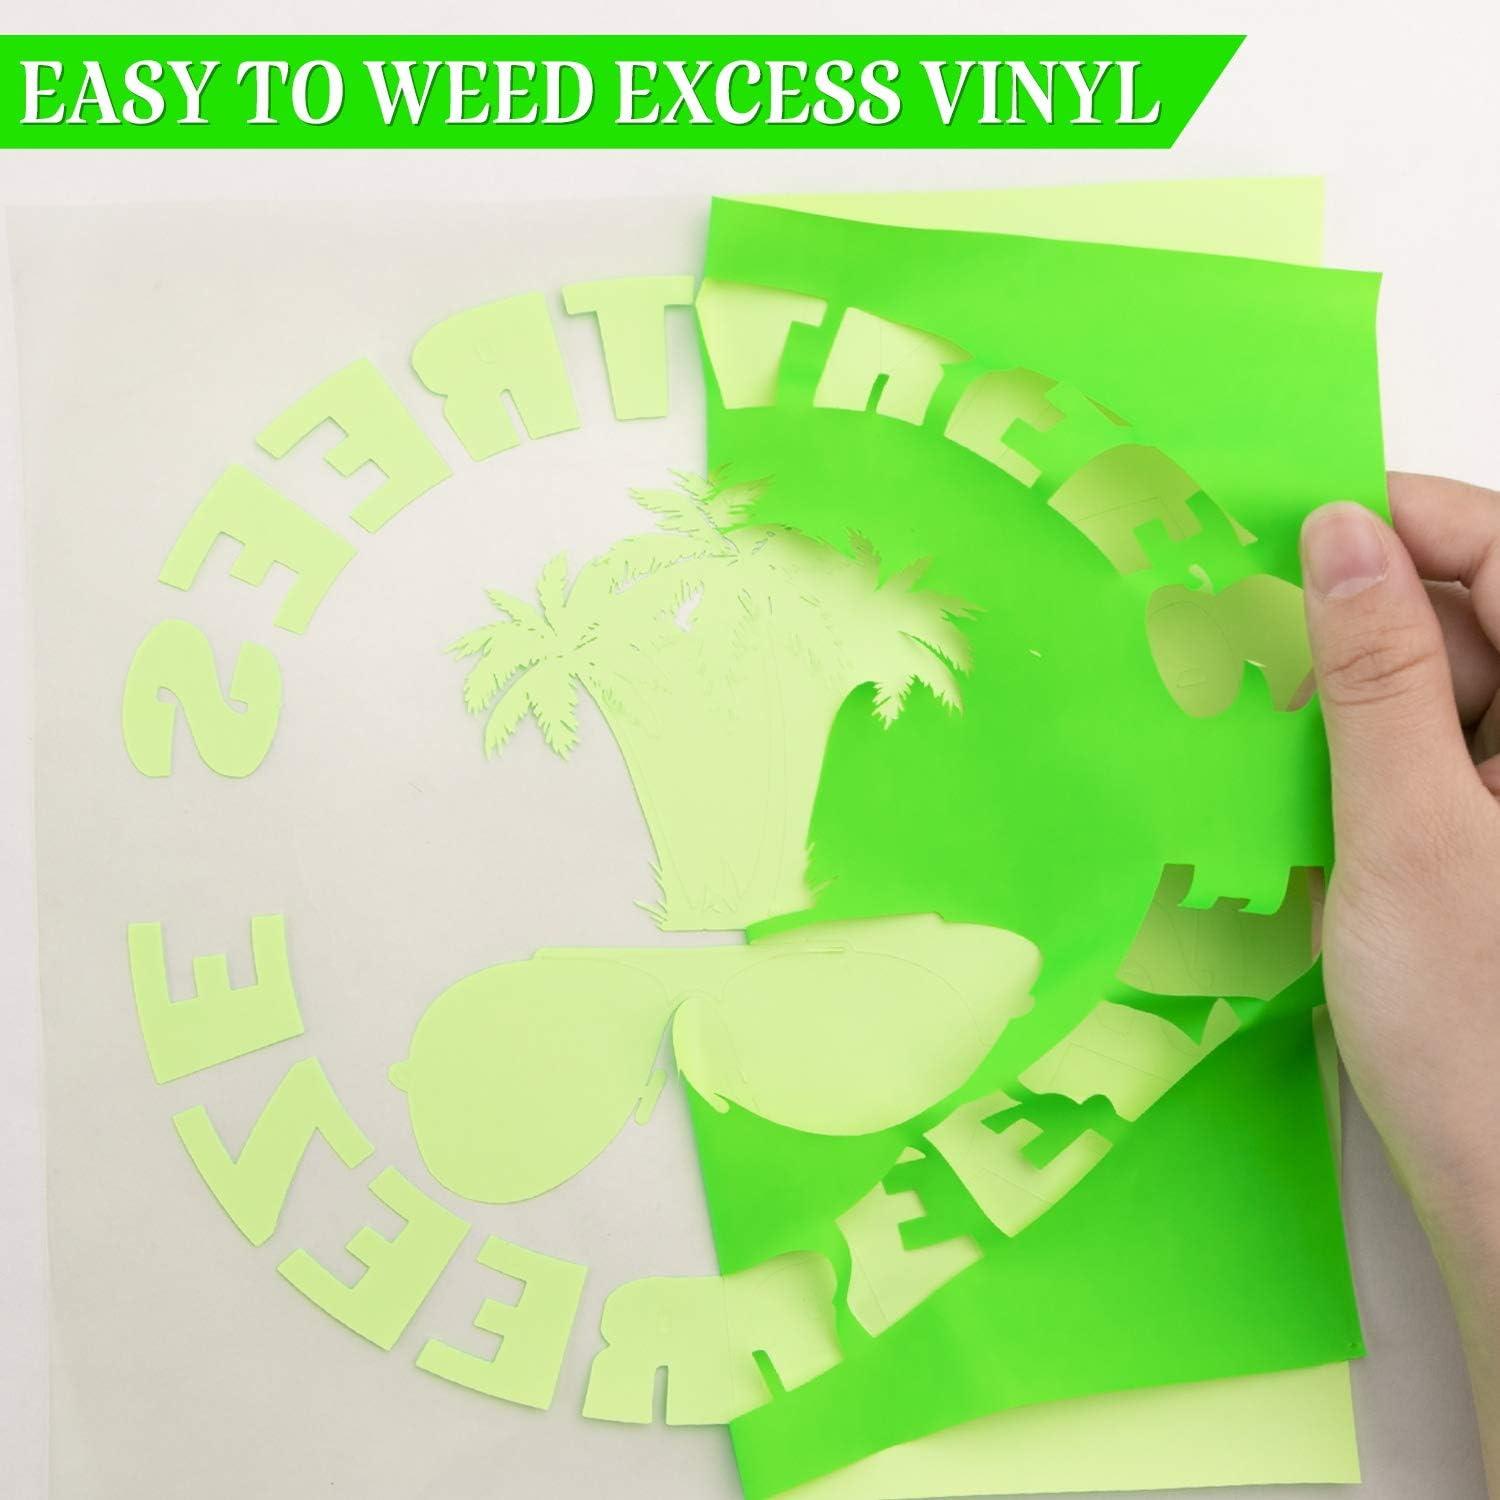  HTVRONT White HTV Vinyl White Heat Transfer Vinyl Roll - 12in  x10ft PU Vinyl HTV Iron on Vinyl Easy to Cut & Weed for Heat Vinyl Design  (White) : Arts, Crafts